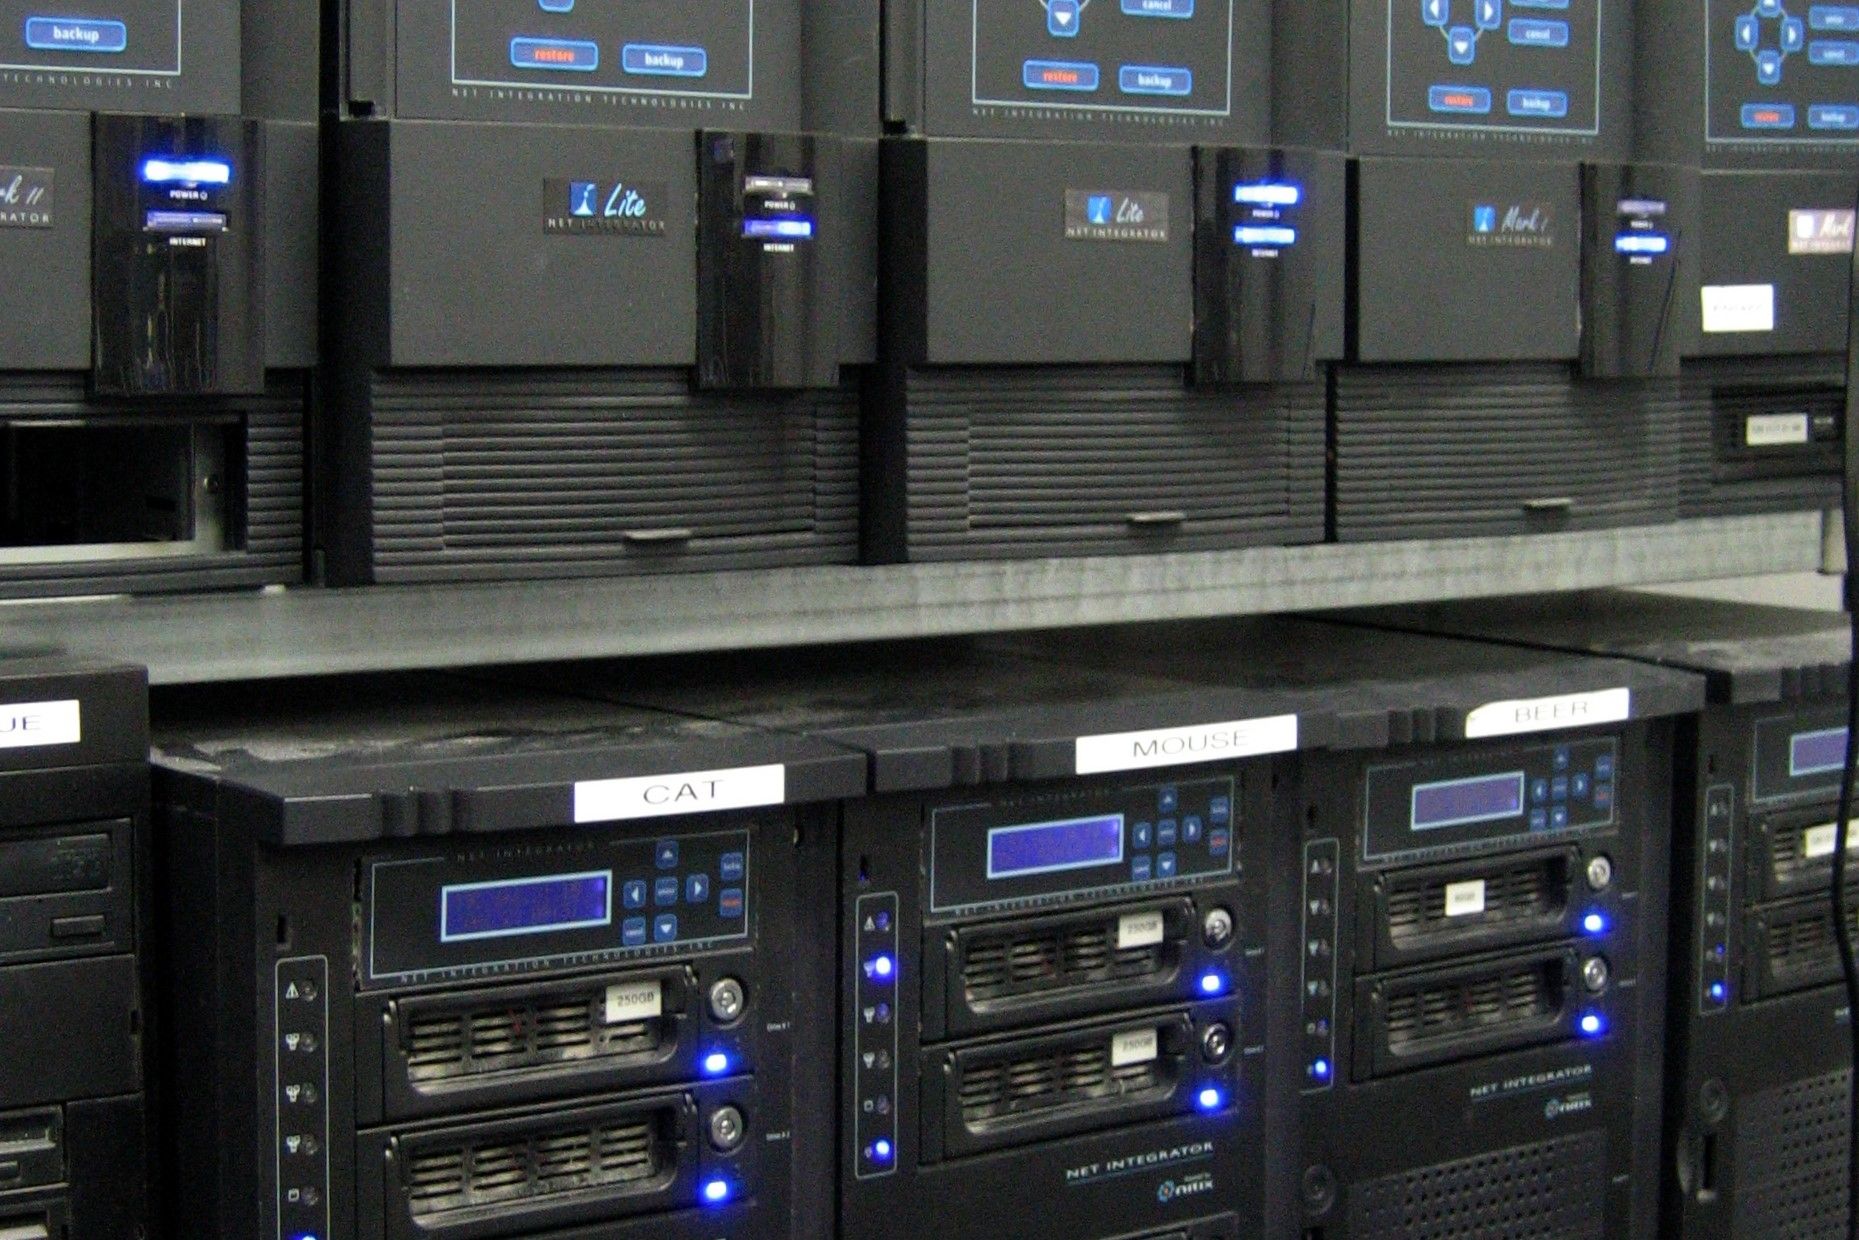 A picture of a server farm - a rack of net integrators